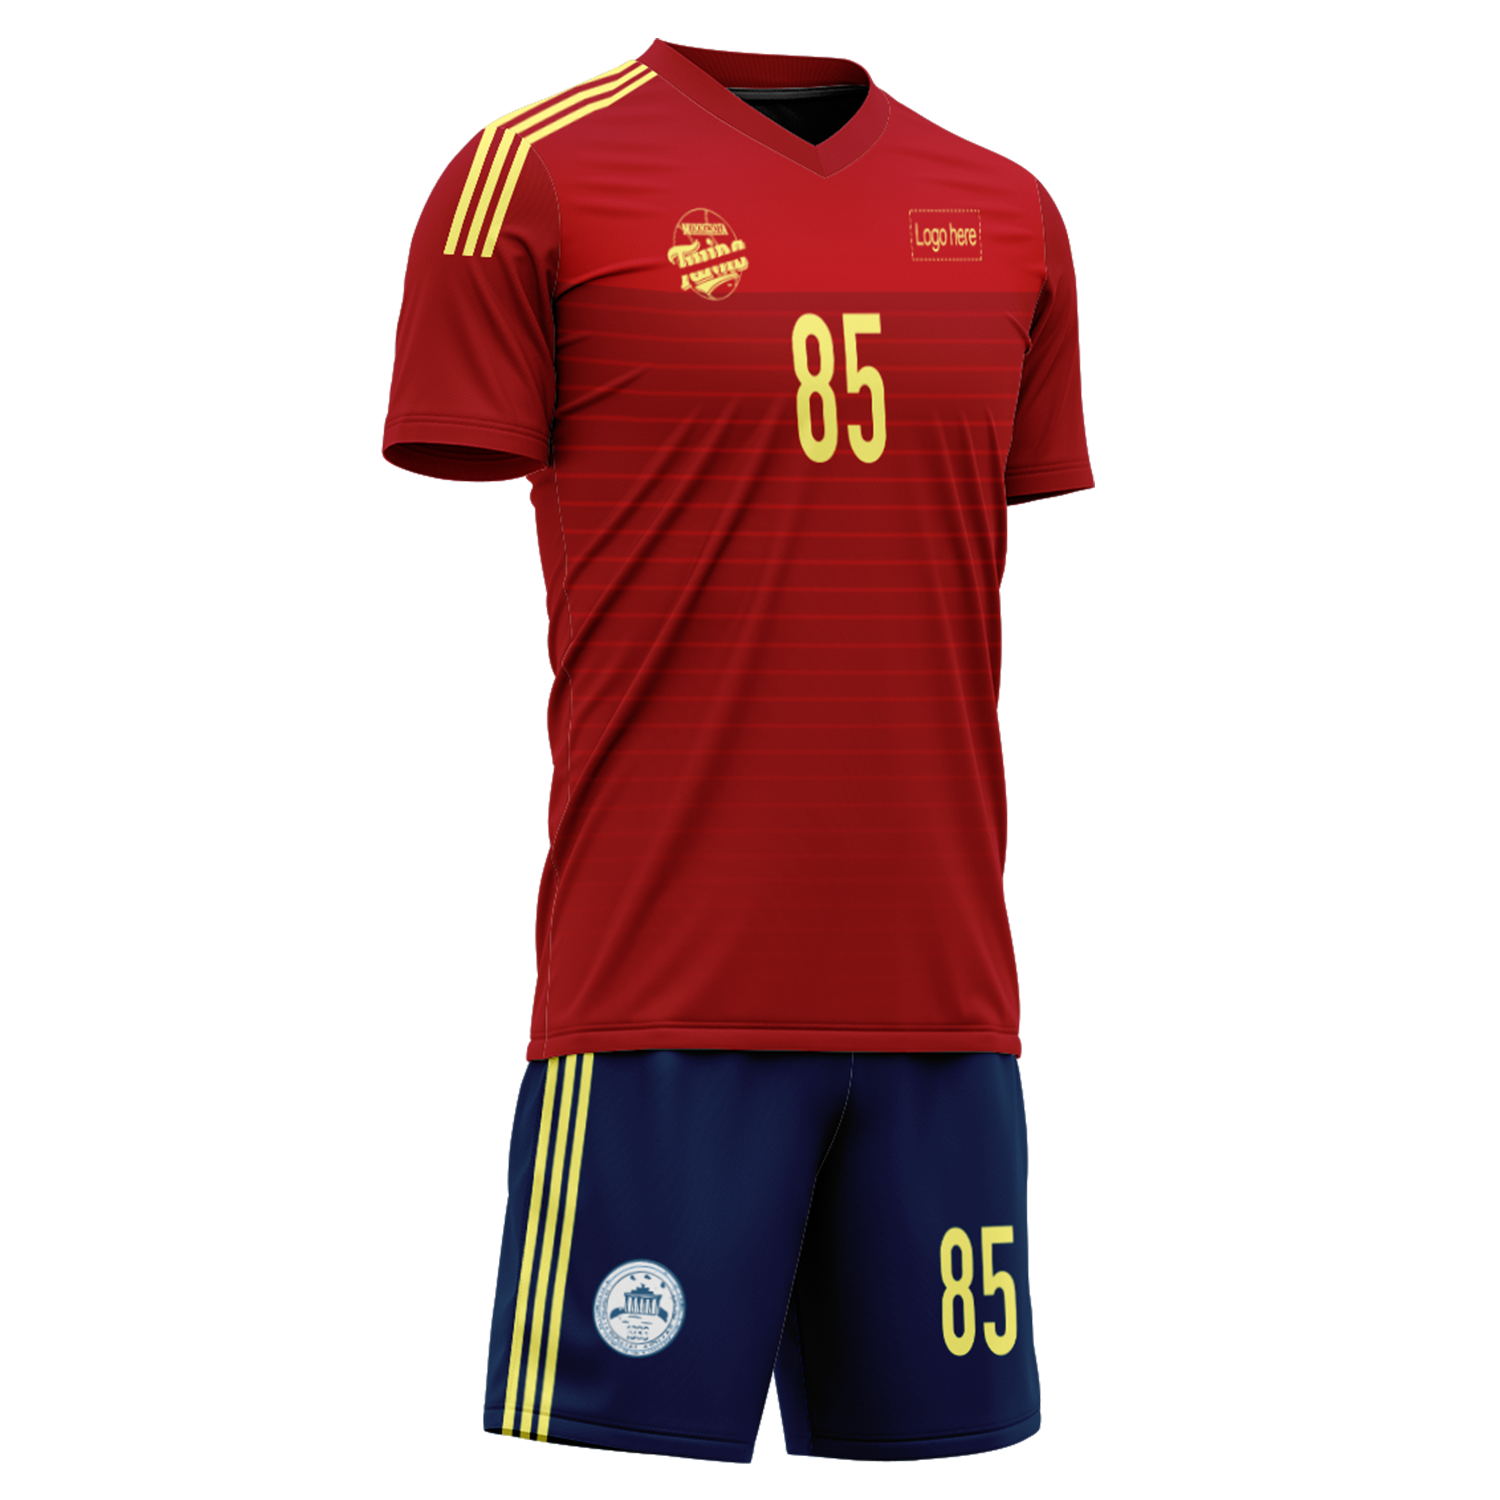 Custom Spain Team Football Suits Personalized Design Print on Demand Soccer Jerseys